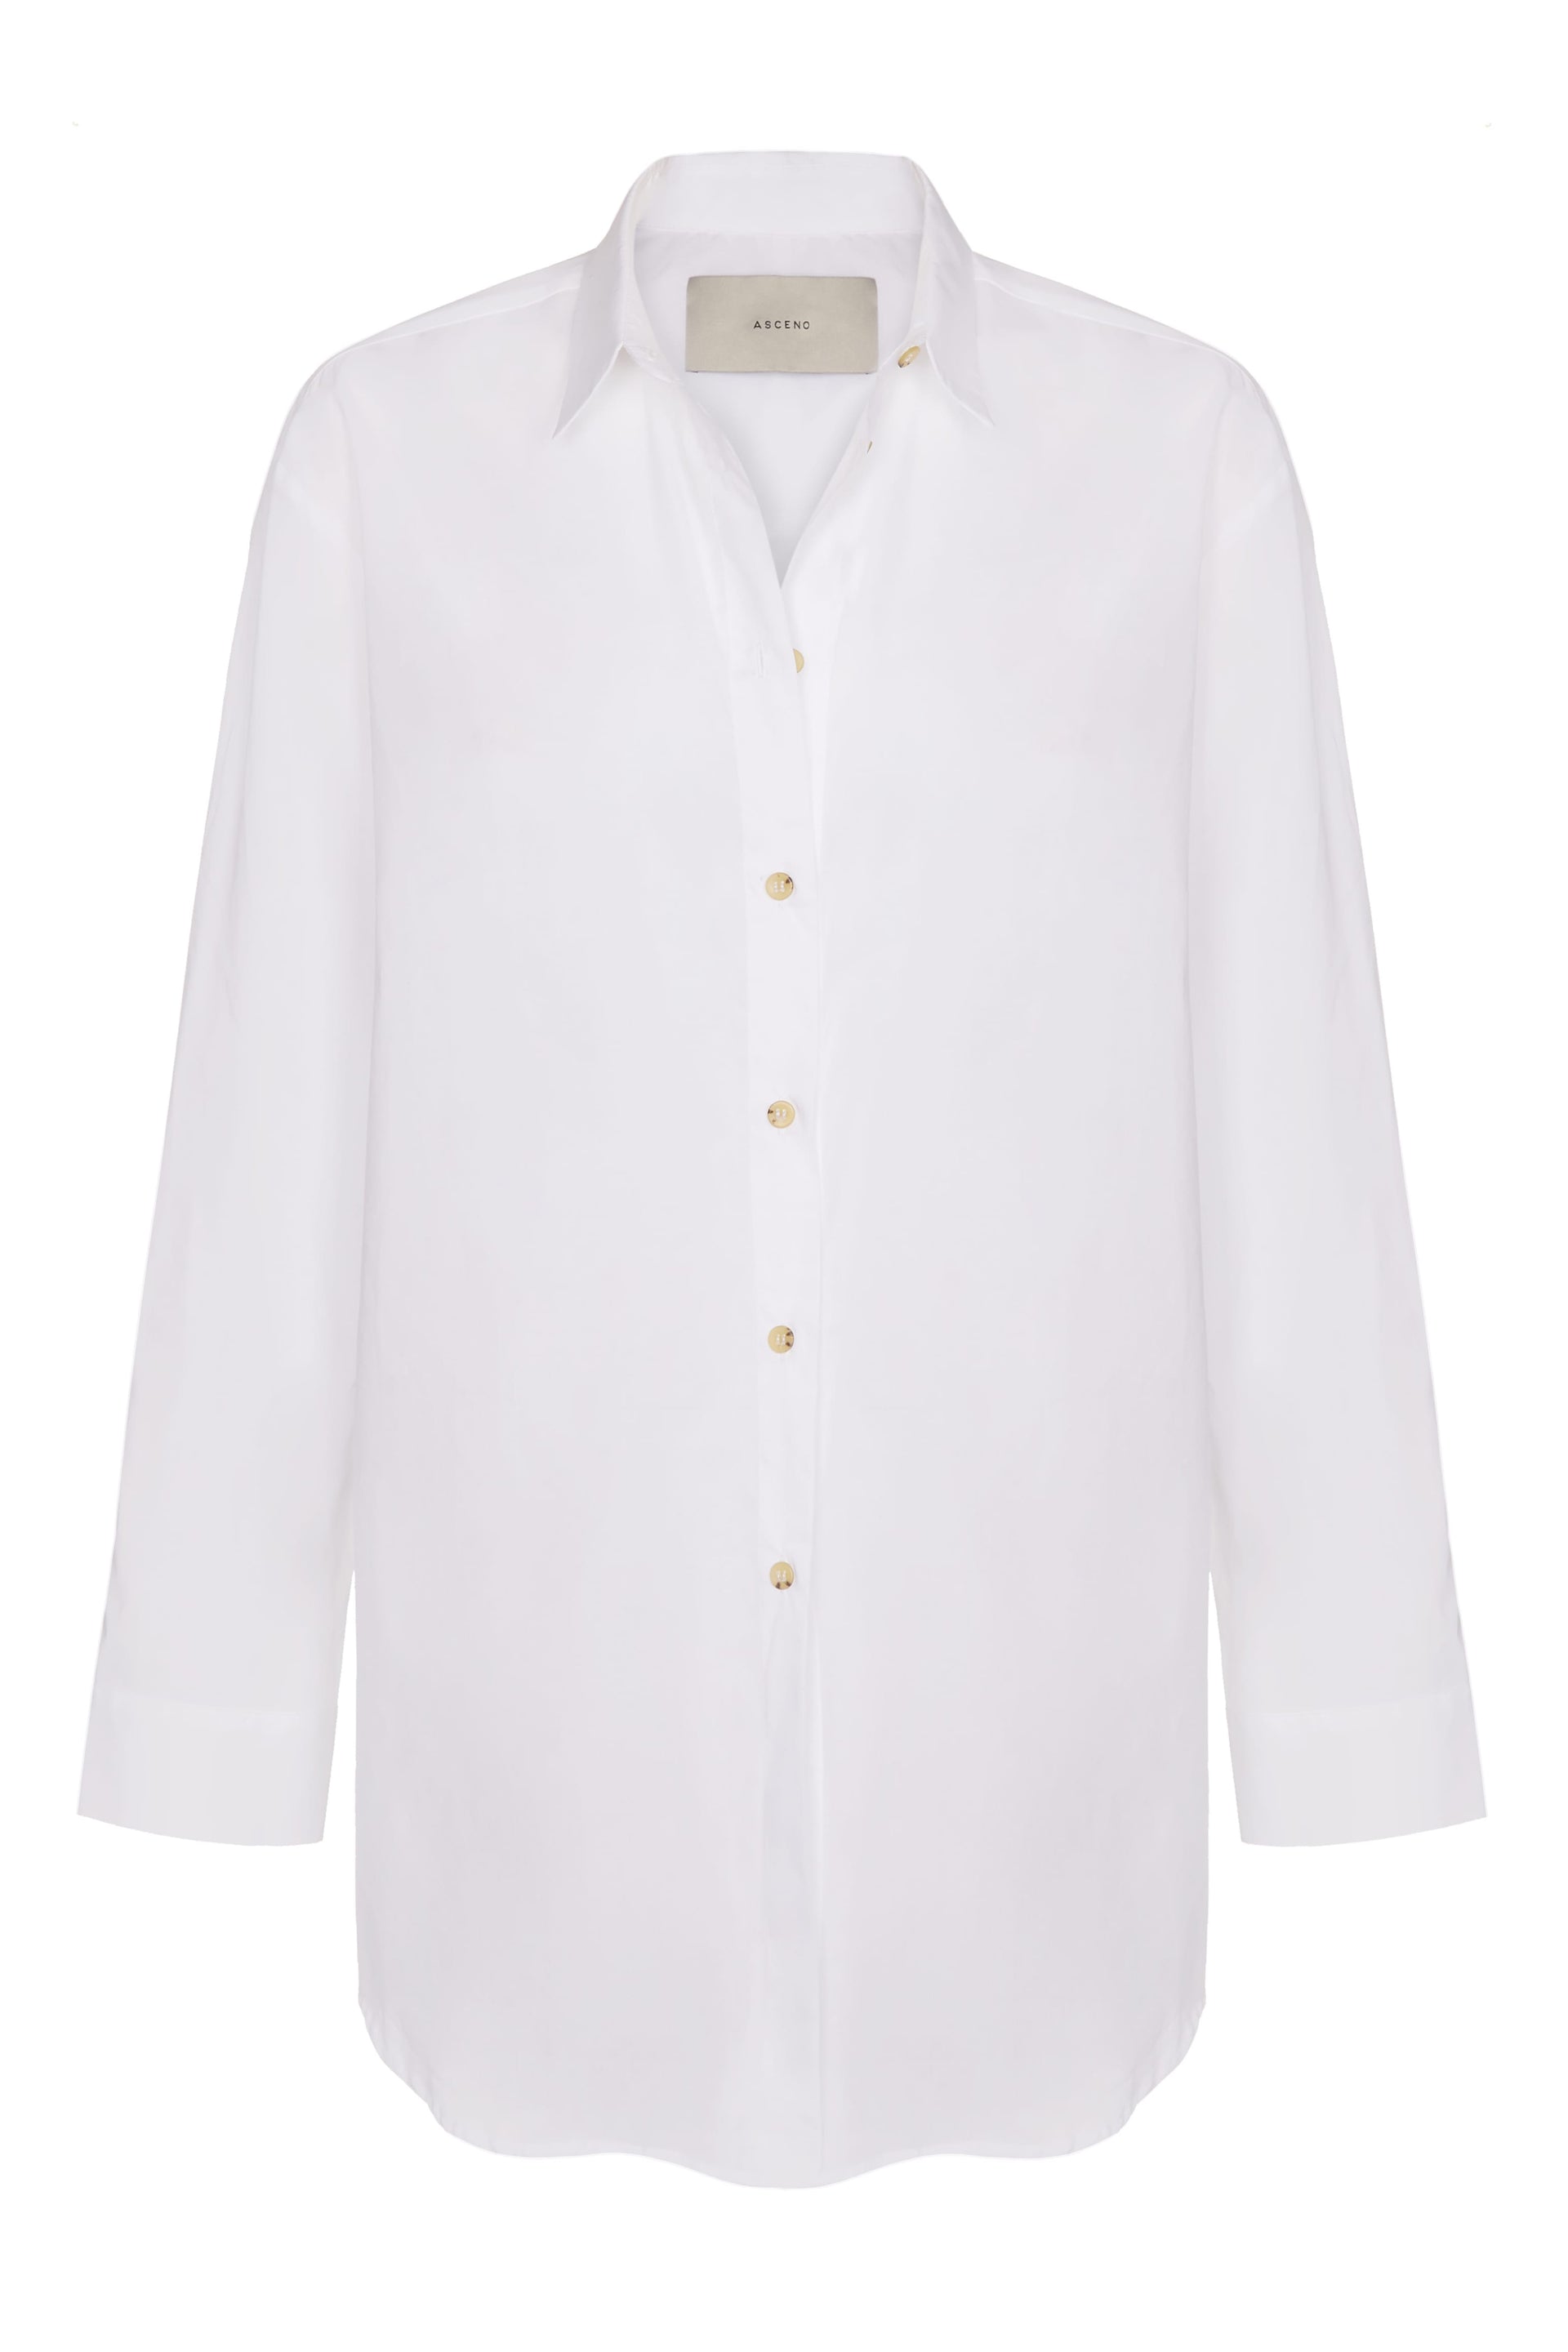 London Pyjama Top White Cotton